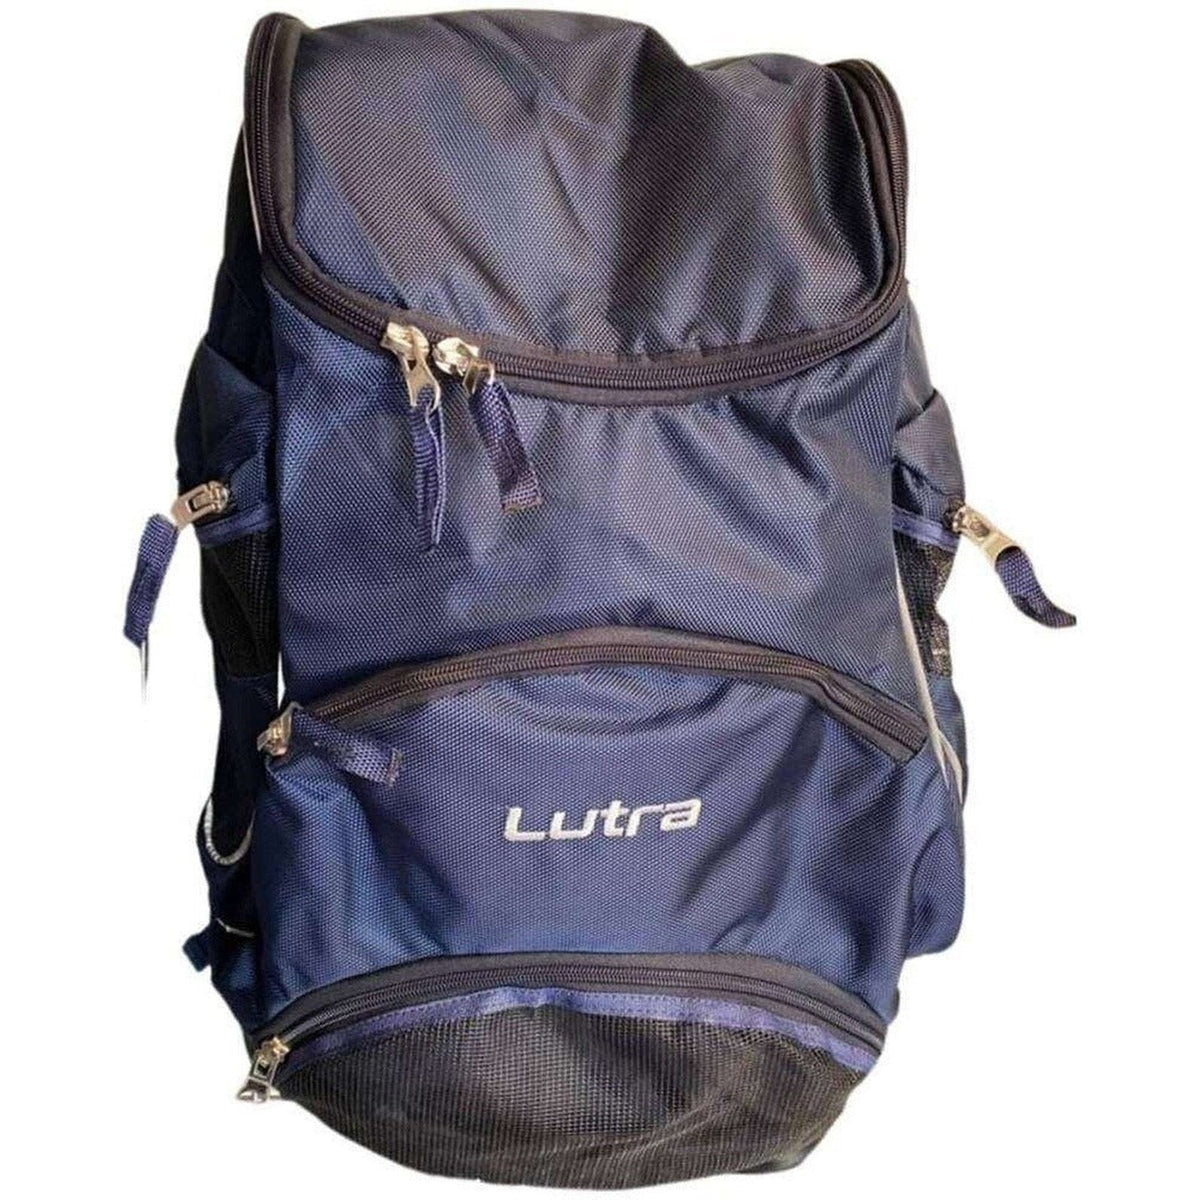 Lutra Premium Team Backpack 45 litre - Navy